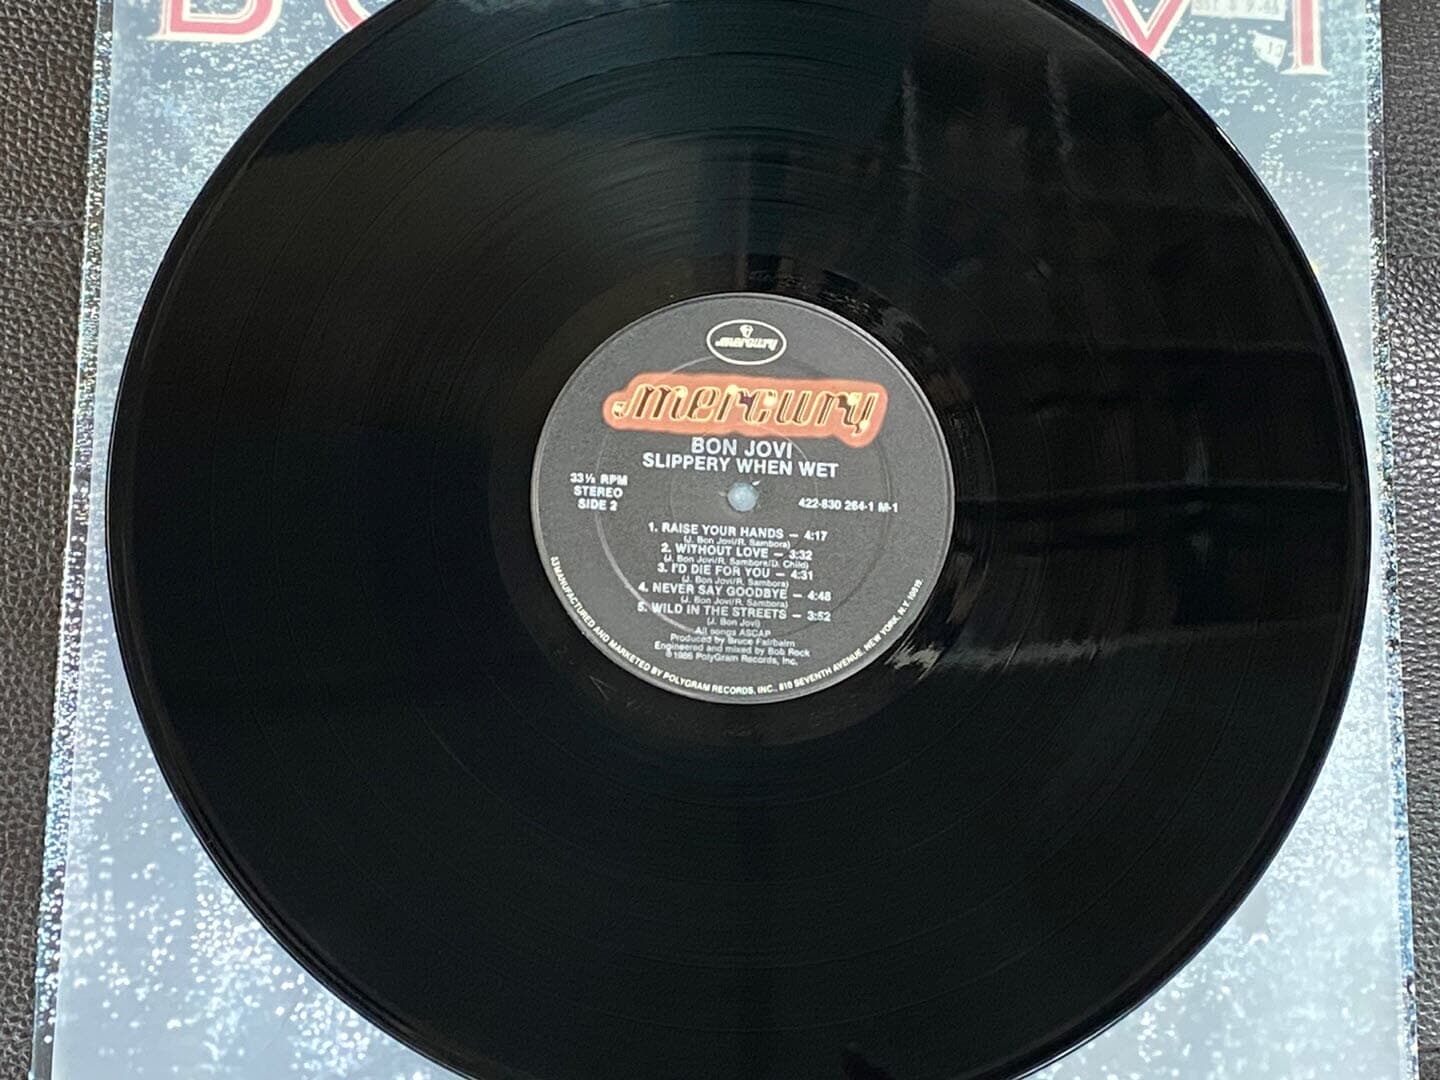 [LP] 본조비 - Bon Jovi - Slippery When Wet LP [1986] [U.S반]